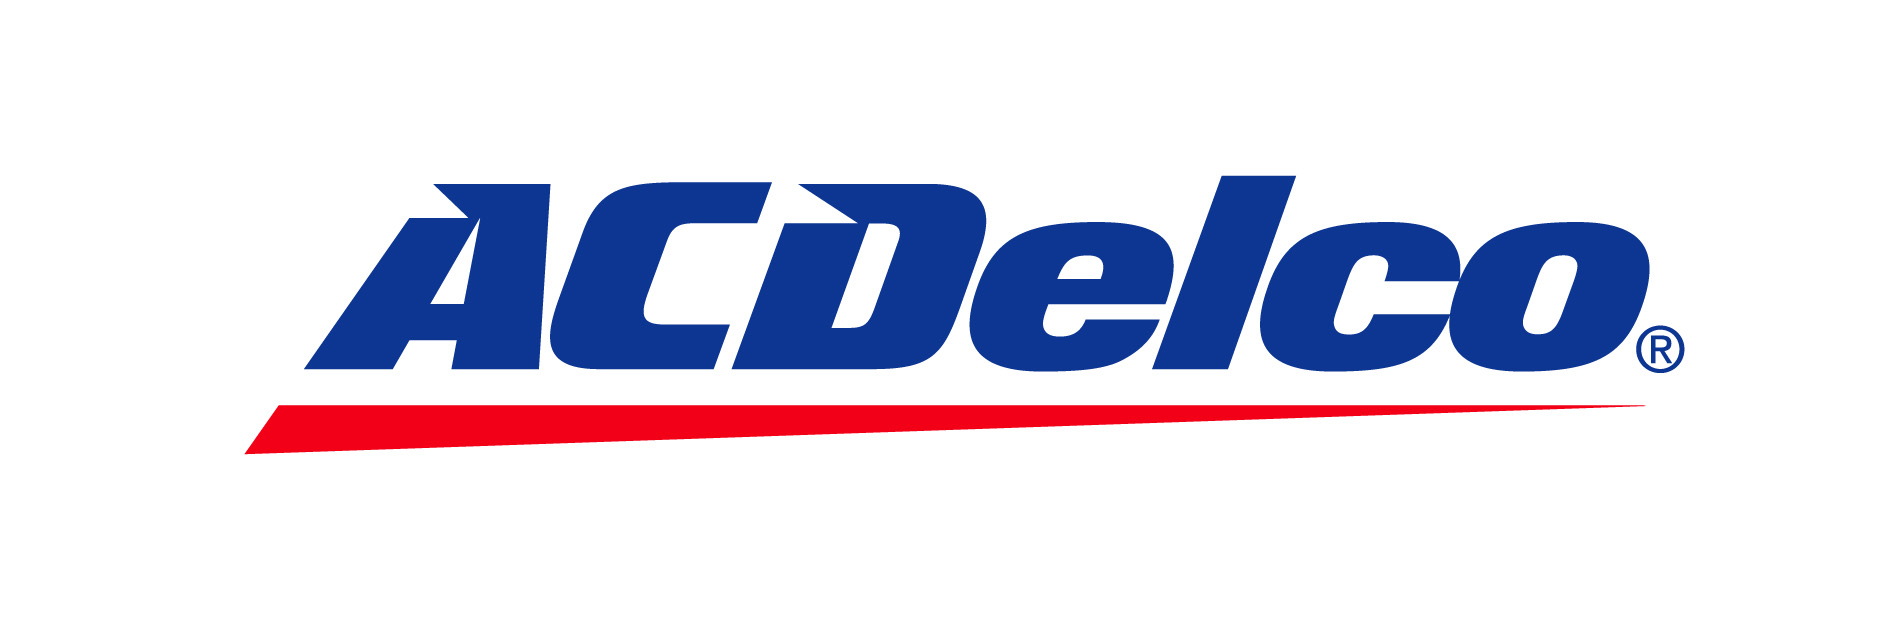 ac-delco-logo.jpg